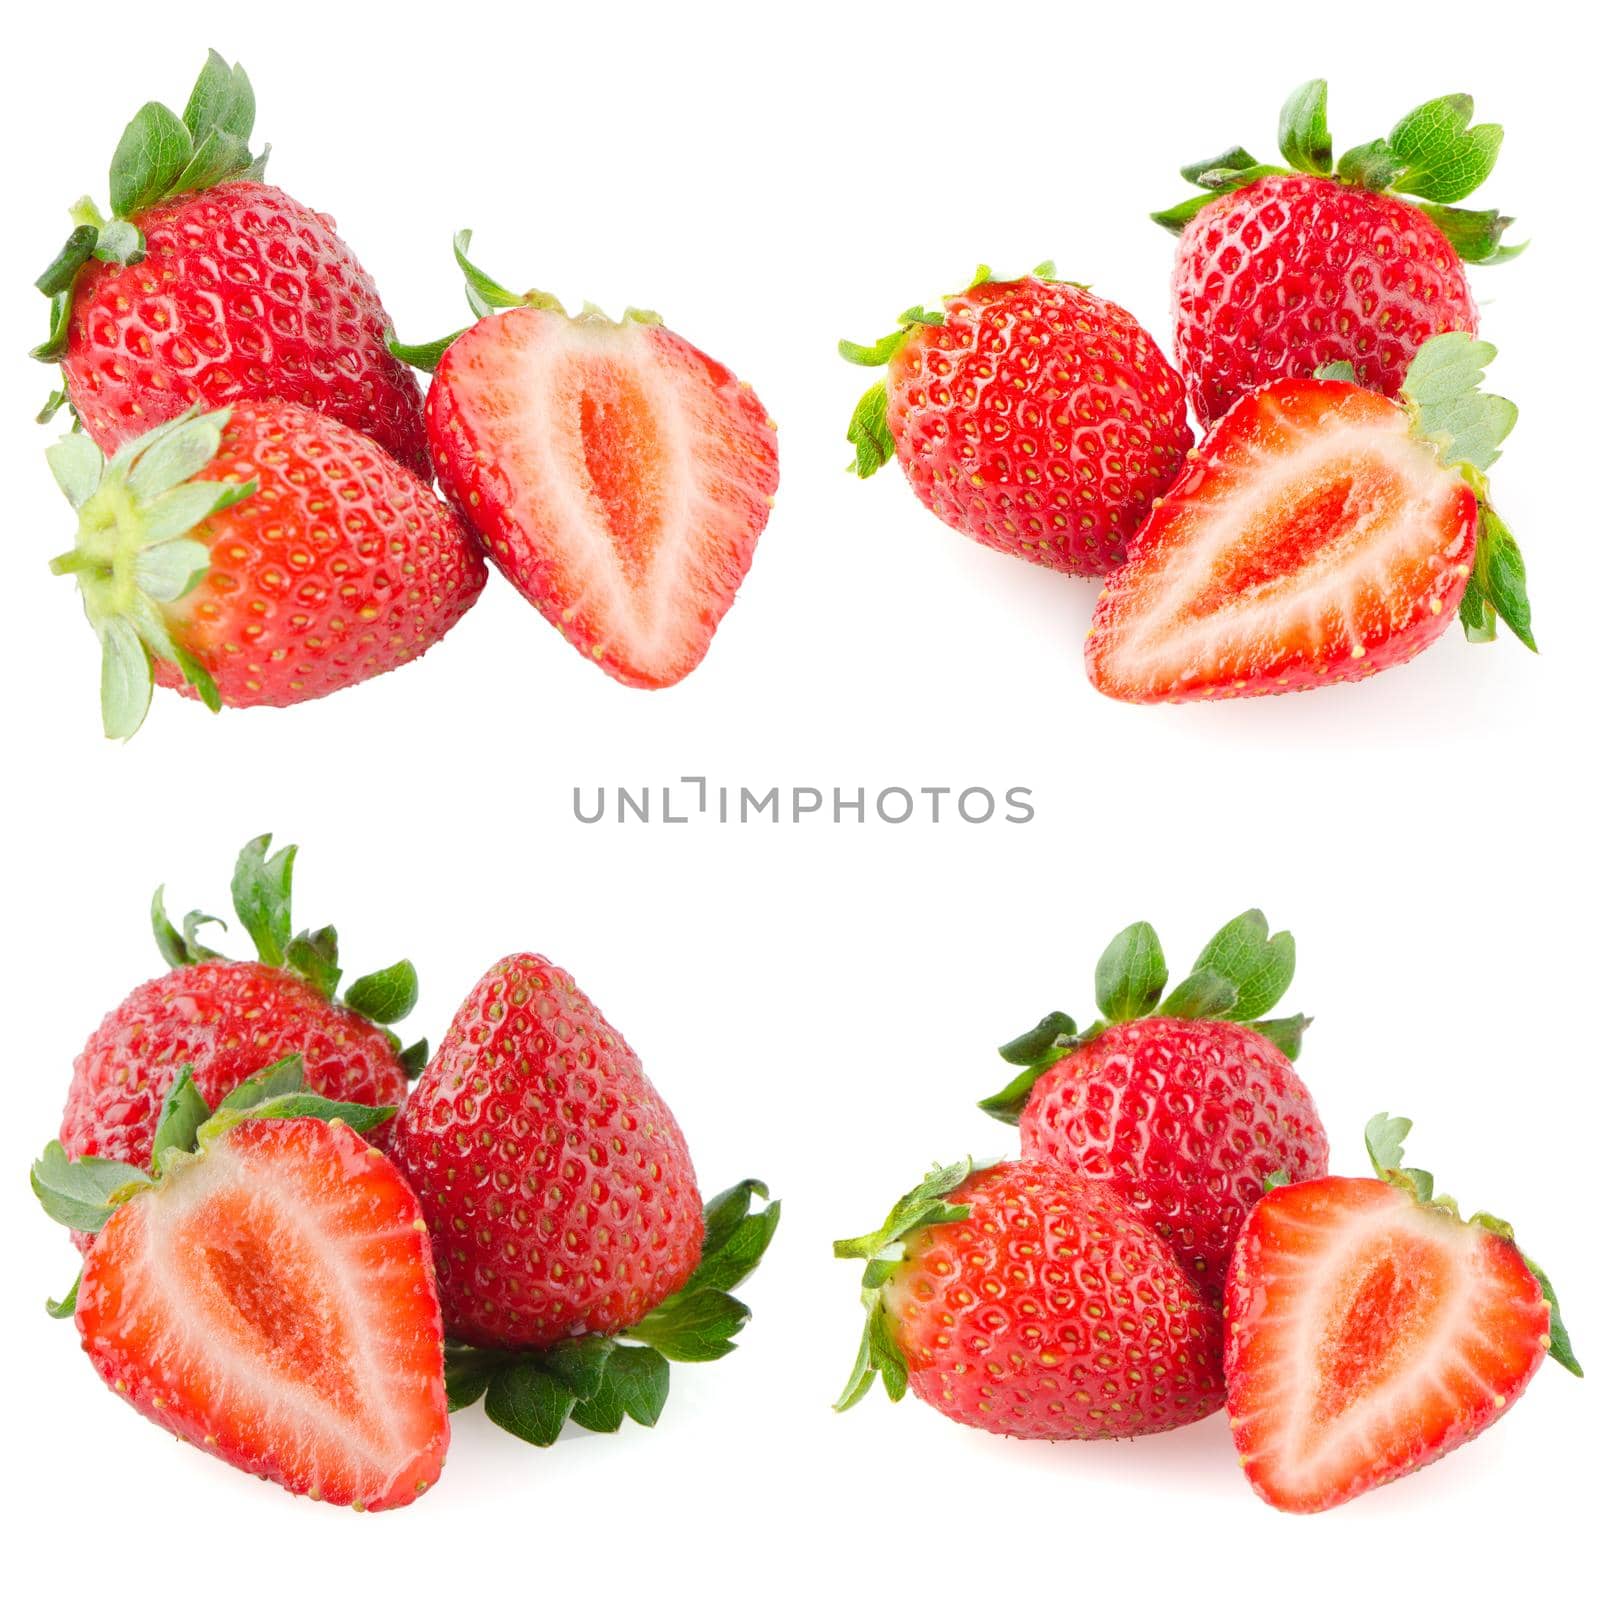 Beautiful strawberries by homydesign